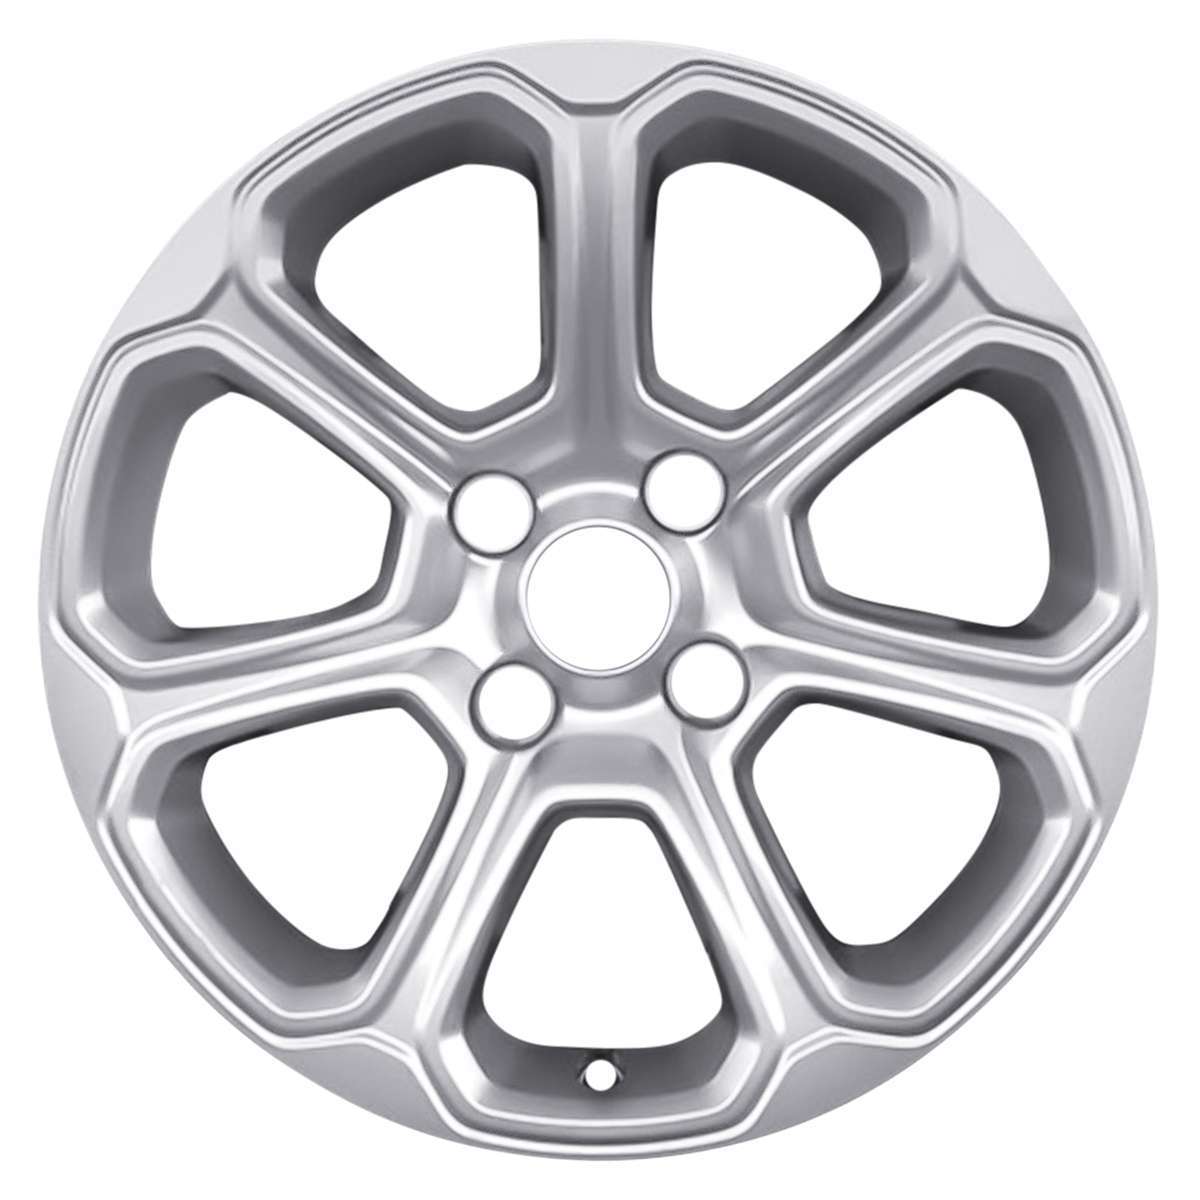 2020 Ford Ecosport 16" OEM Wheel Rim W10149S